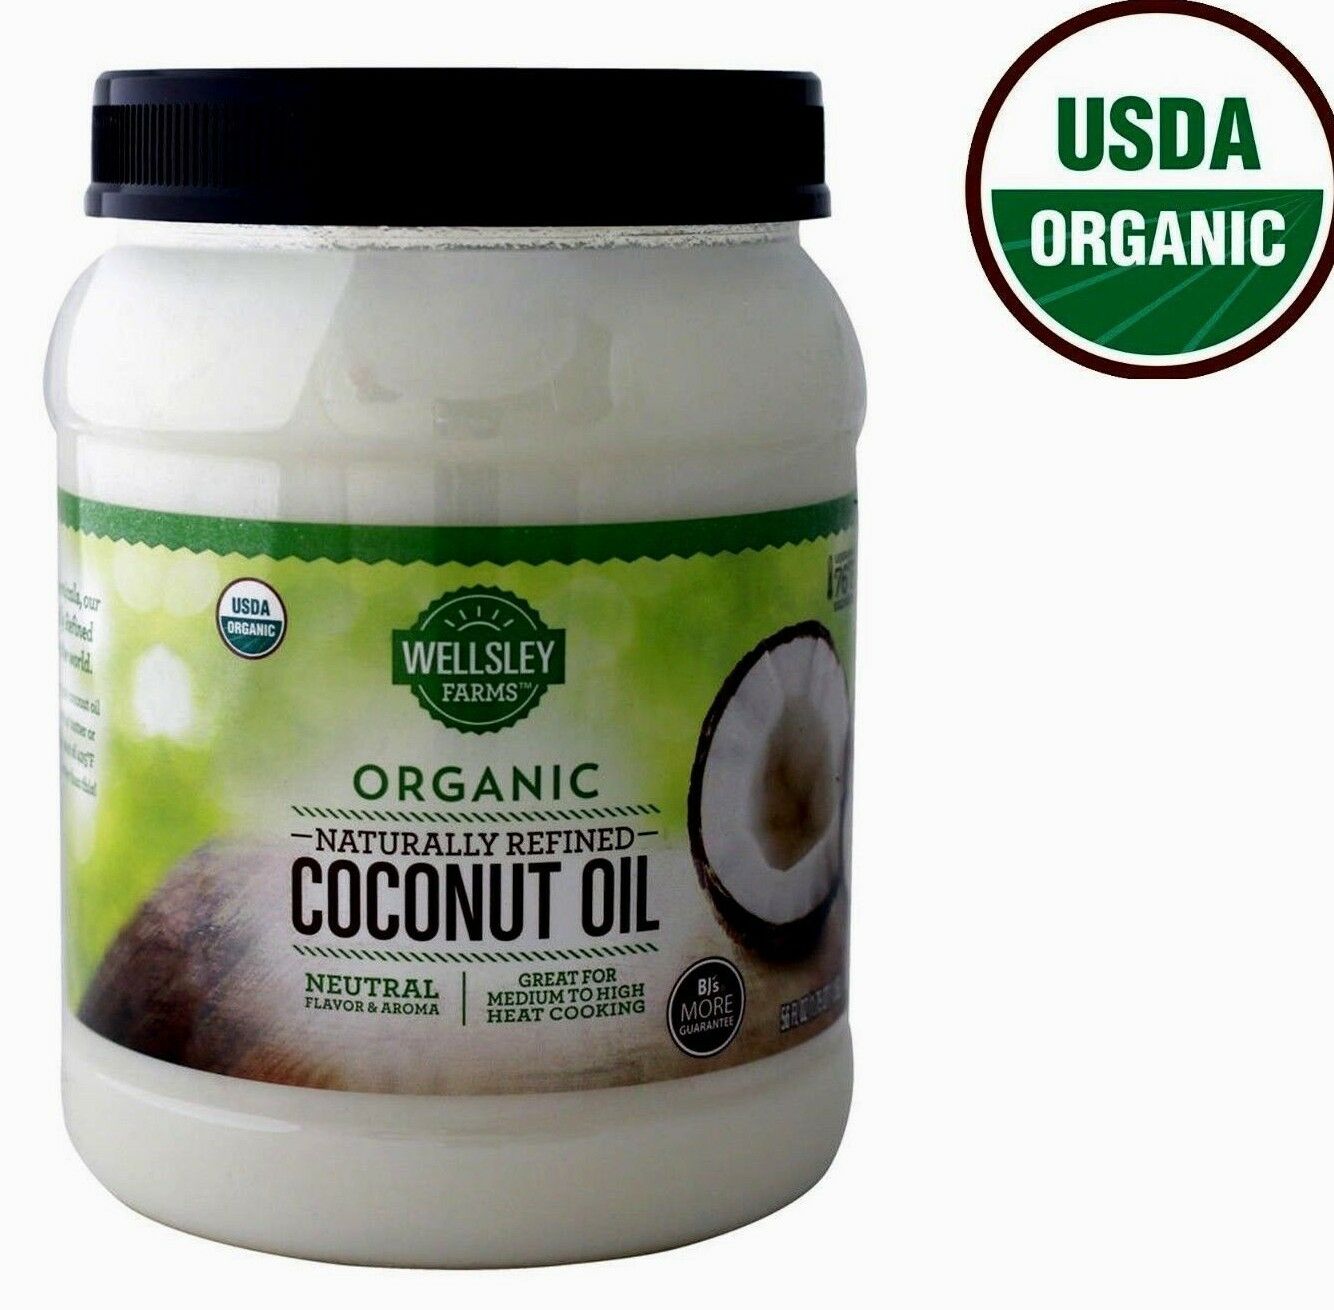 🔥 Wellsley Farms Coconut Oil Naturally Refined 100% USDA Organic, 56 FL. OZ.